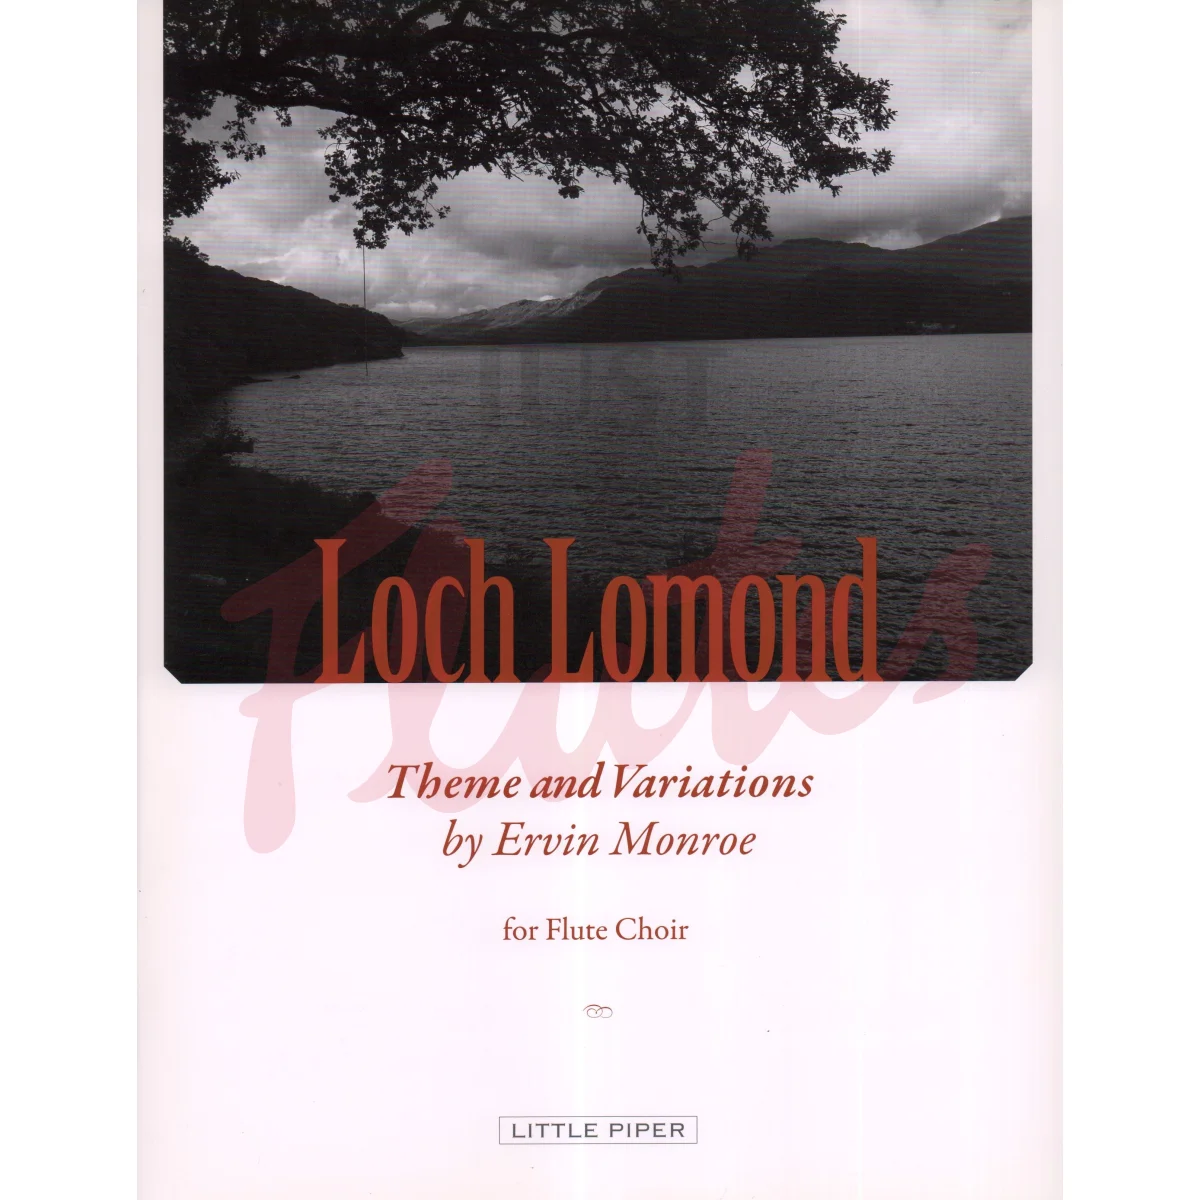 Loch Lomond - Theme and Variations